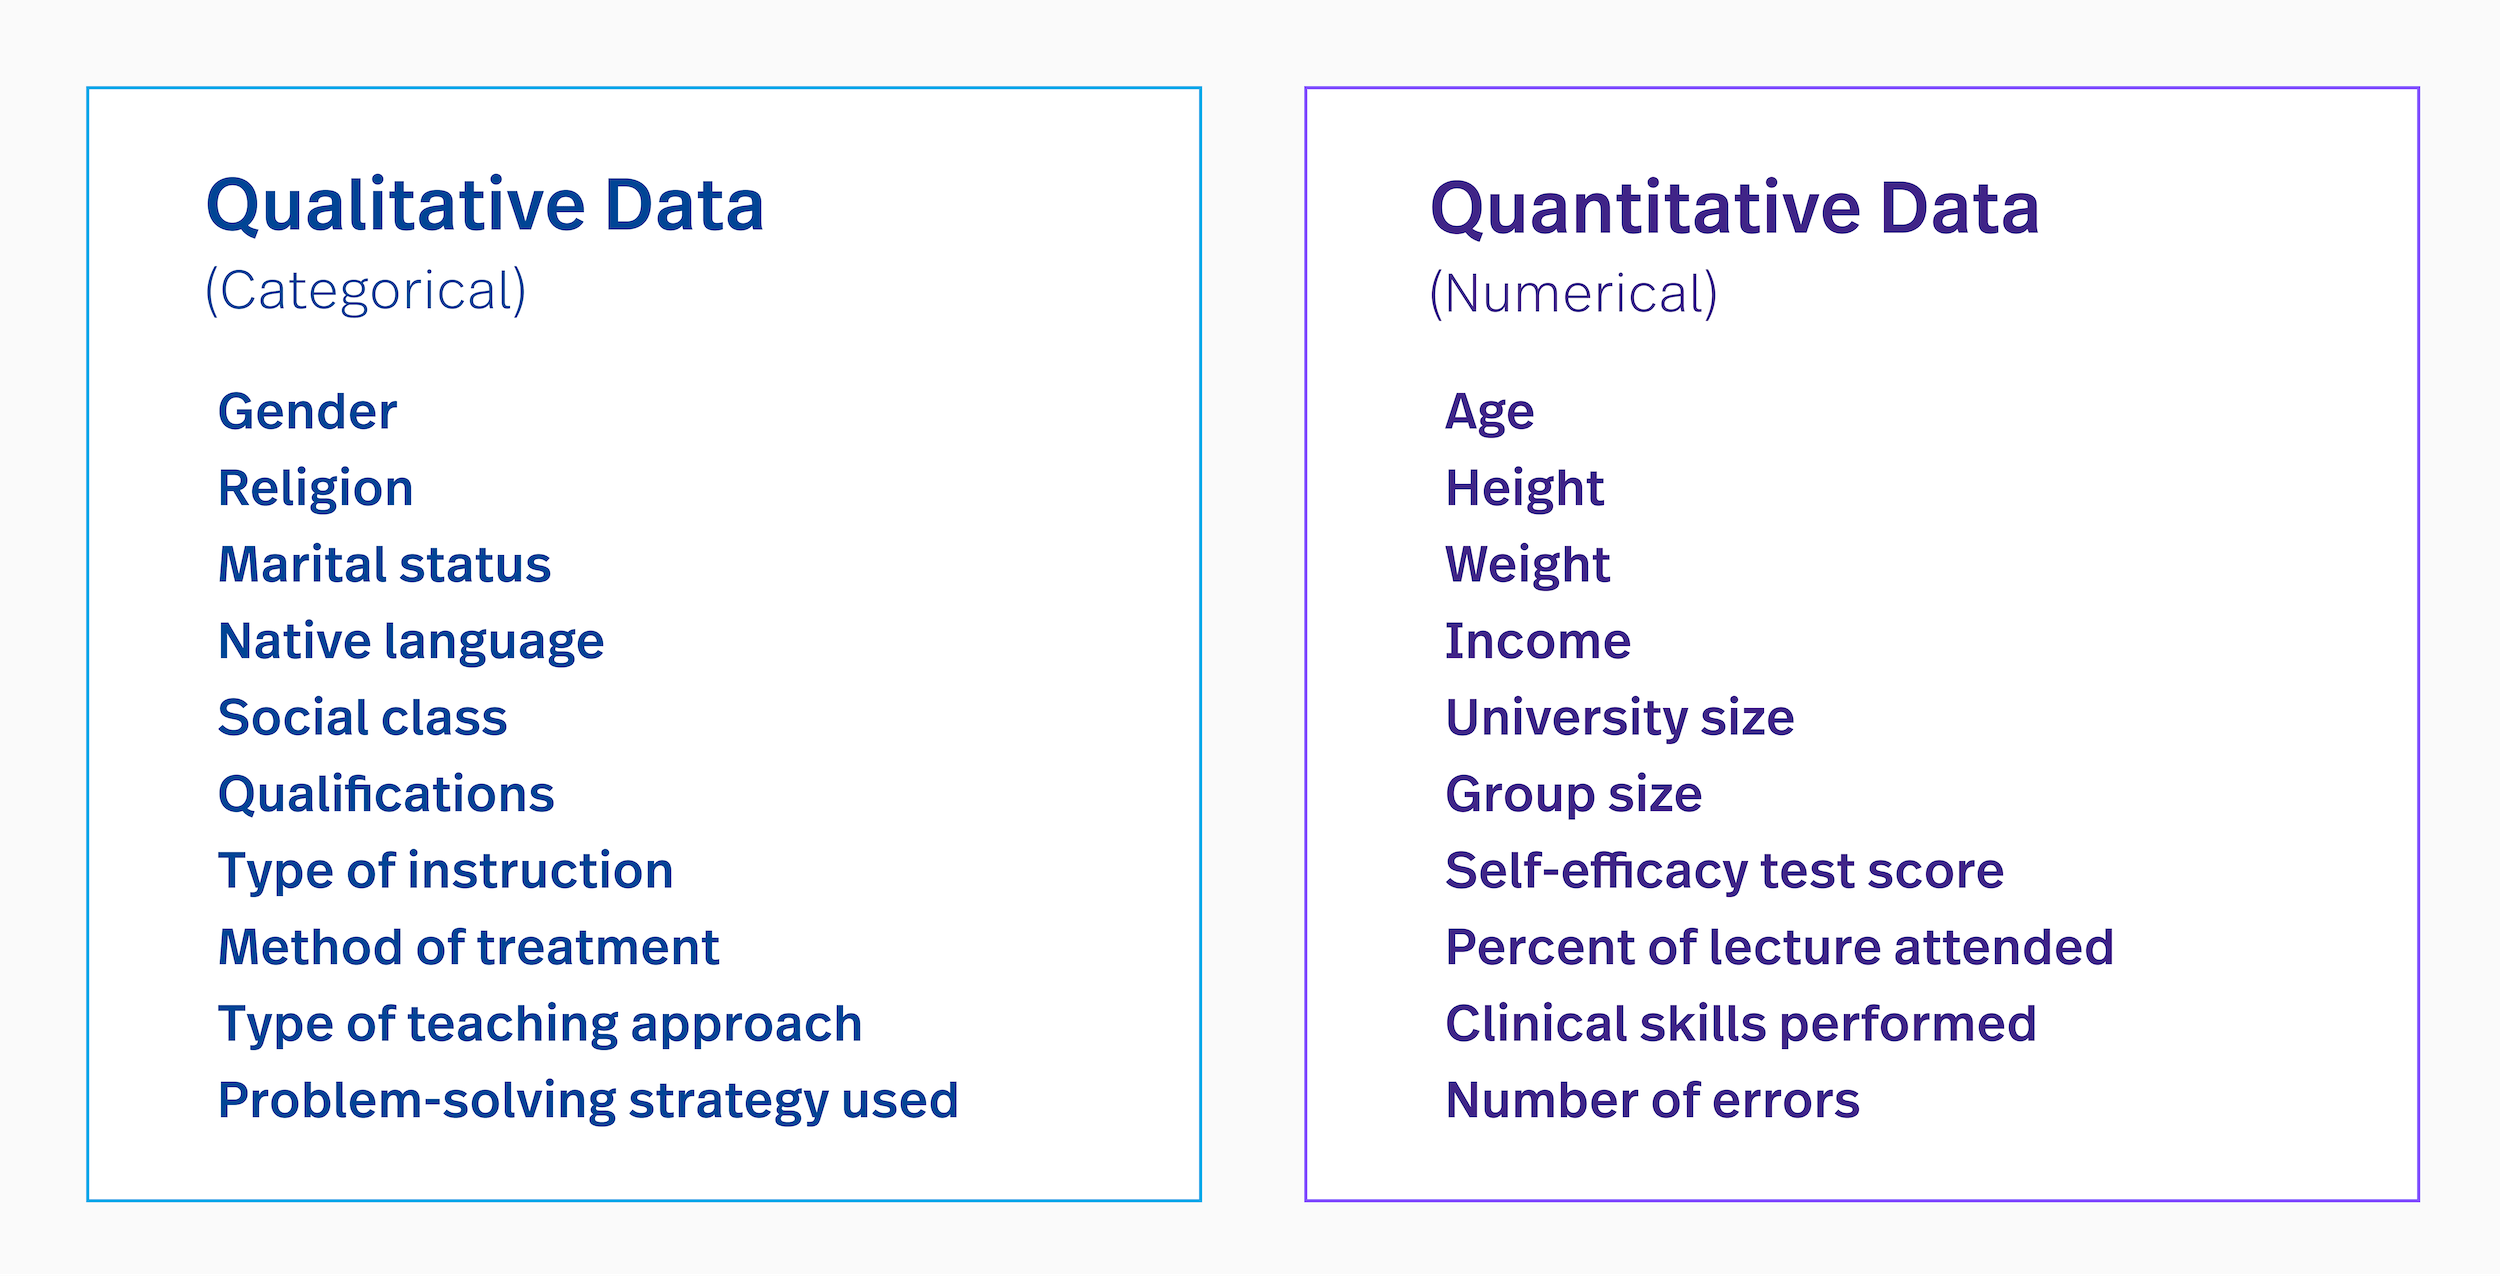 qualitative data examples